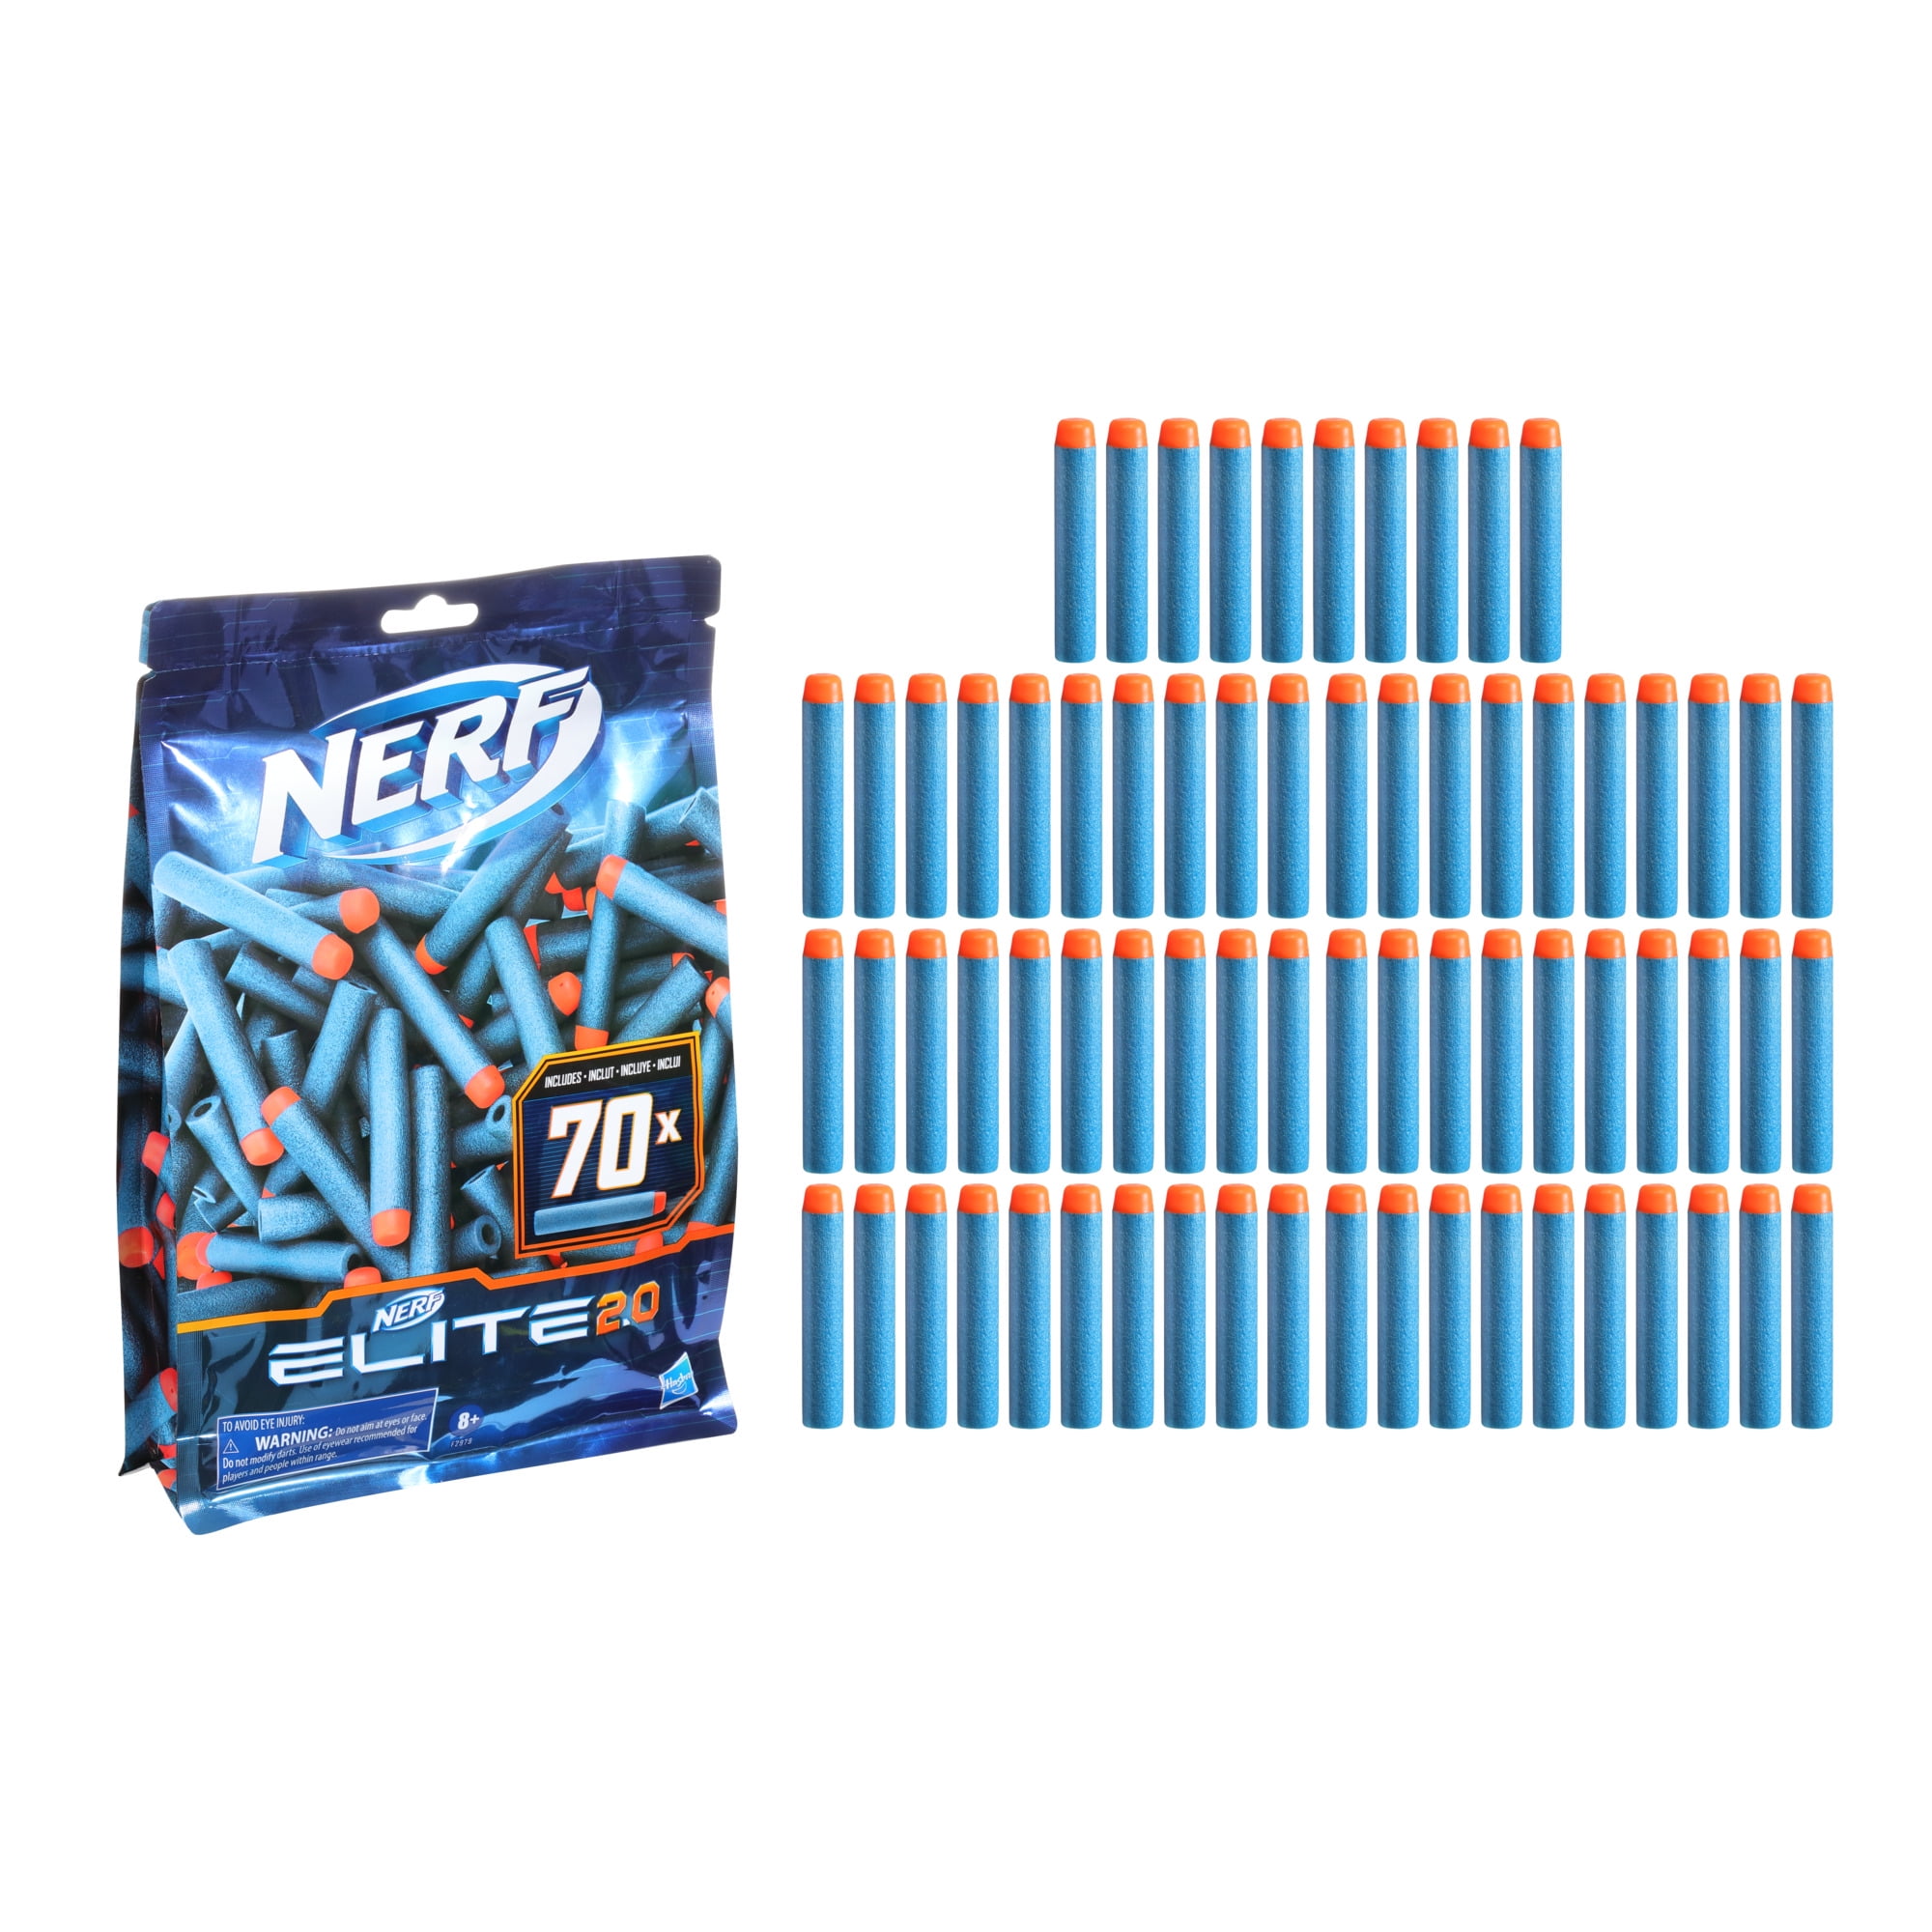 elevation Tentacle marmorering Nerf Elite 2.0 70-Dart Refill Pack, Includes 70 Official Nerf Elite 2.0  Darts for Blasters - Walmart.com